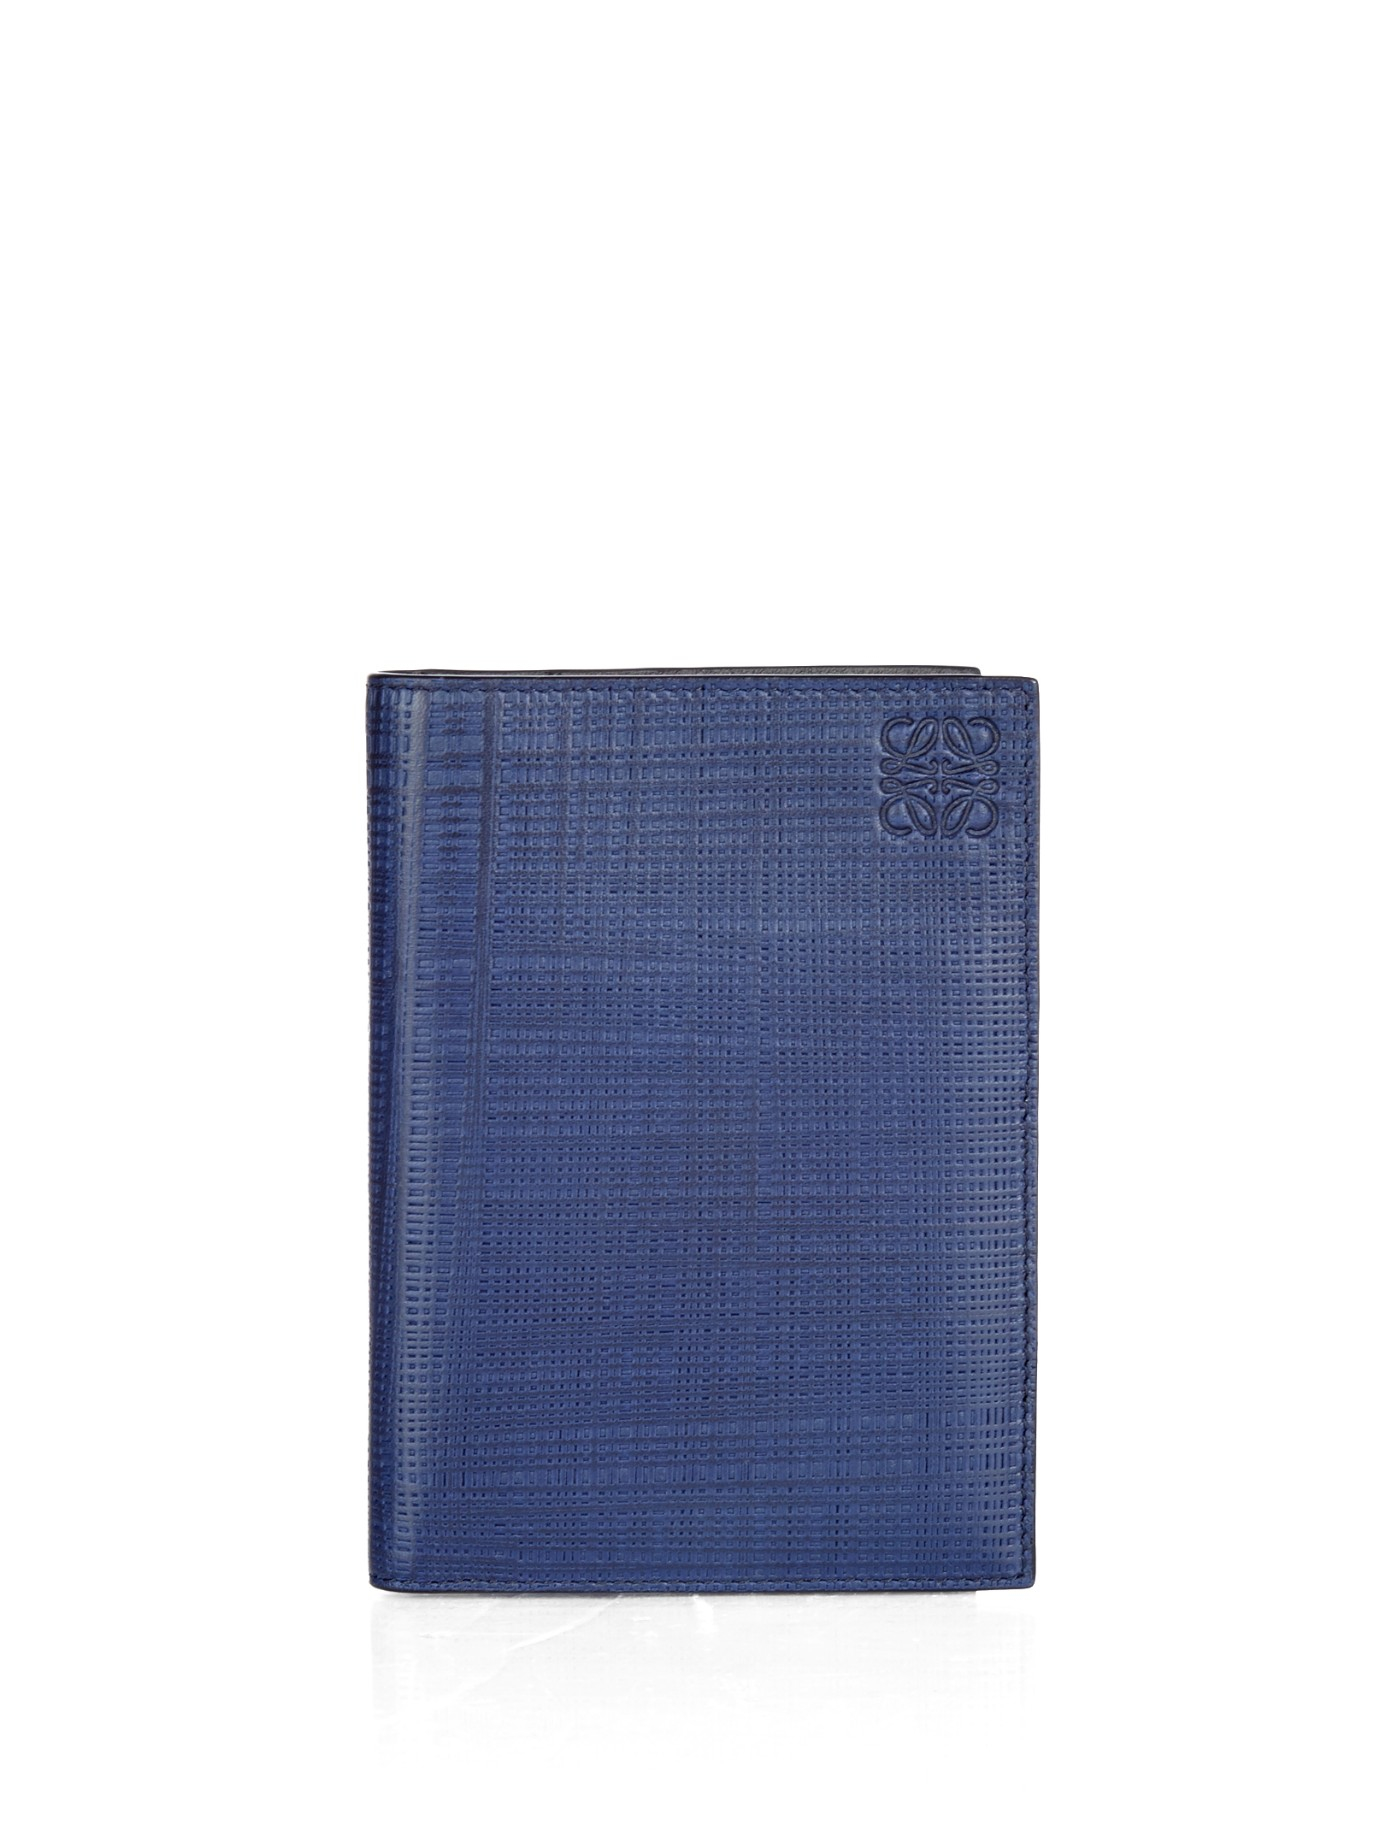 Loewe Textured Leather Passport Holder 